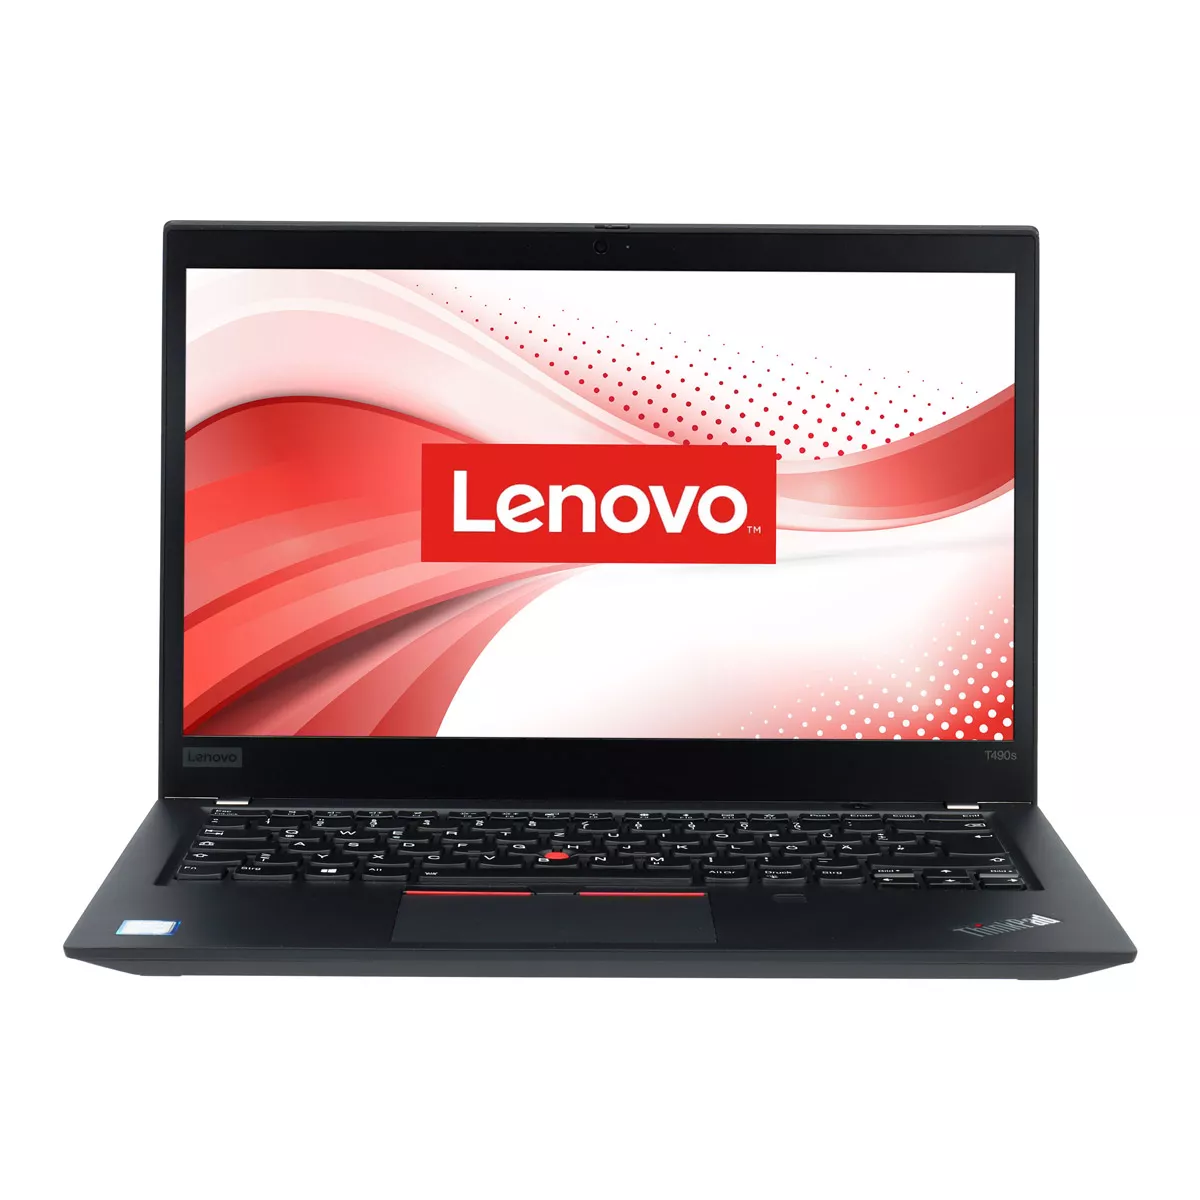 Lenovo ThinkPad T490s Core i5 8365U Full-HD Touch 240 GB M.2 nVME SSD Webcam A